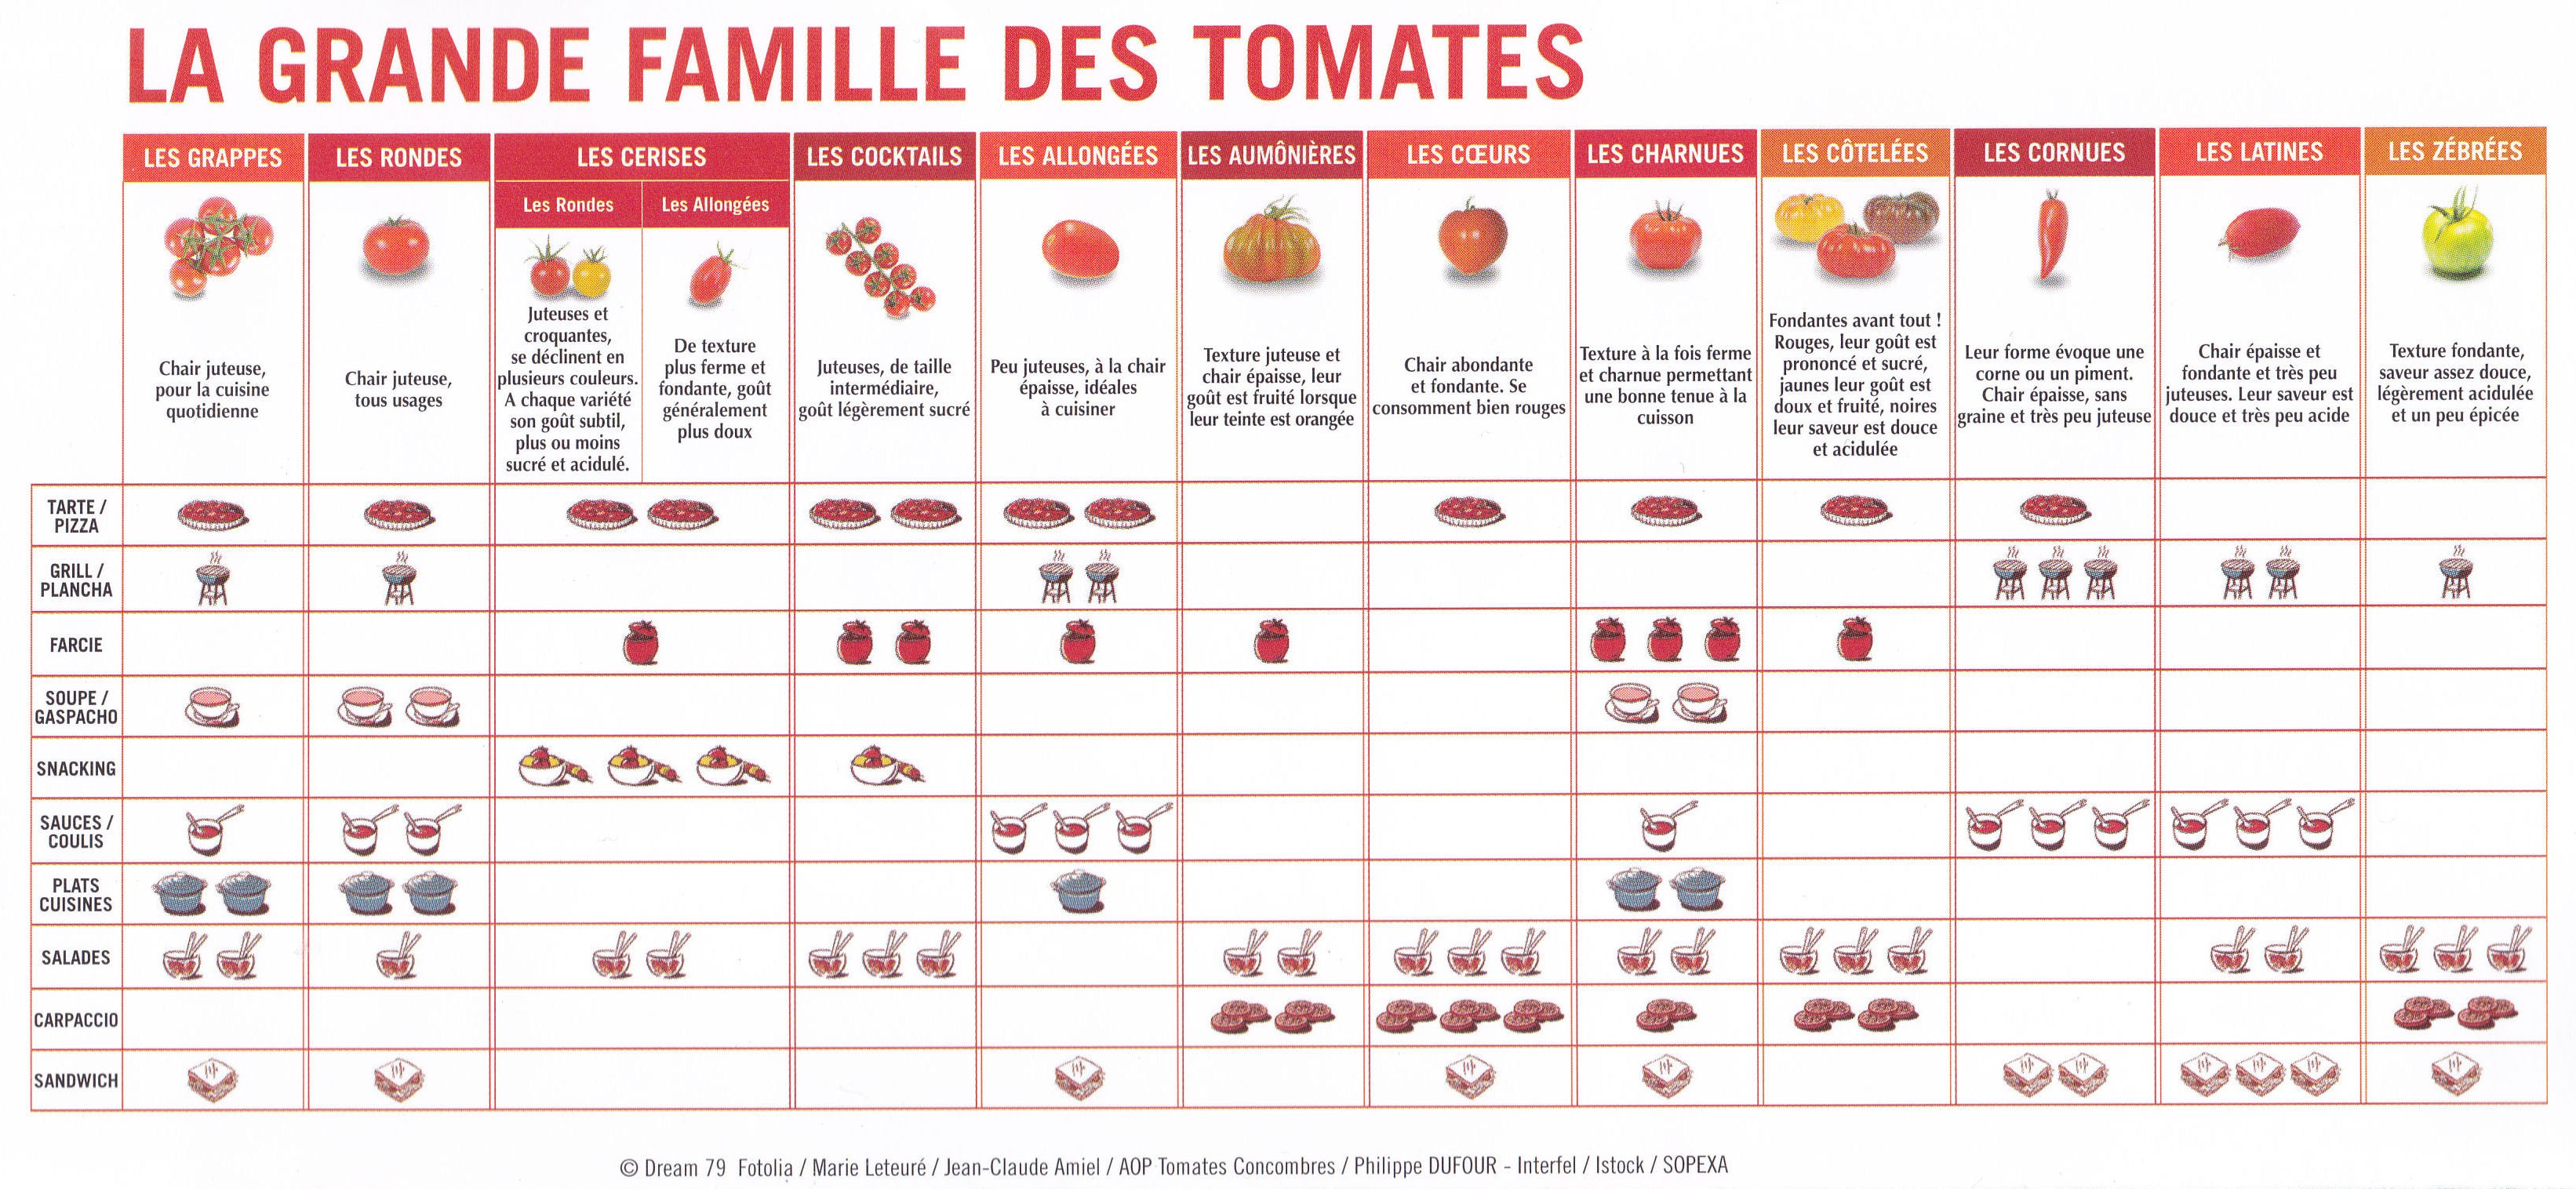 Usage tomates grande famille